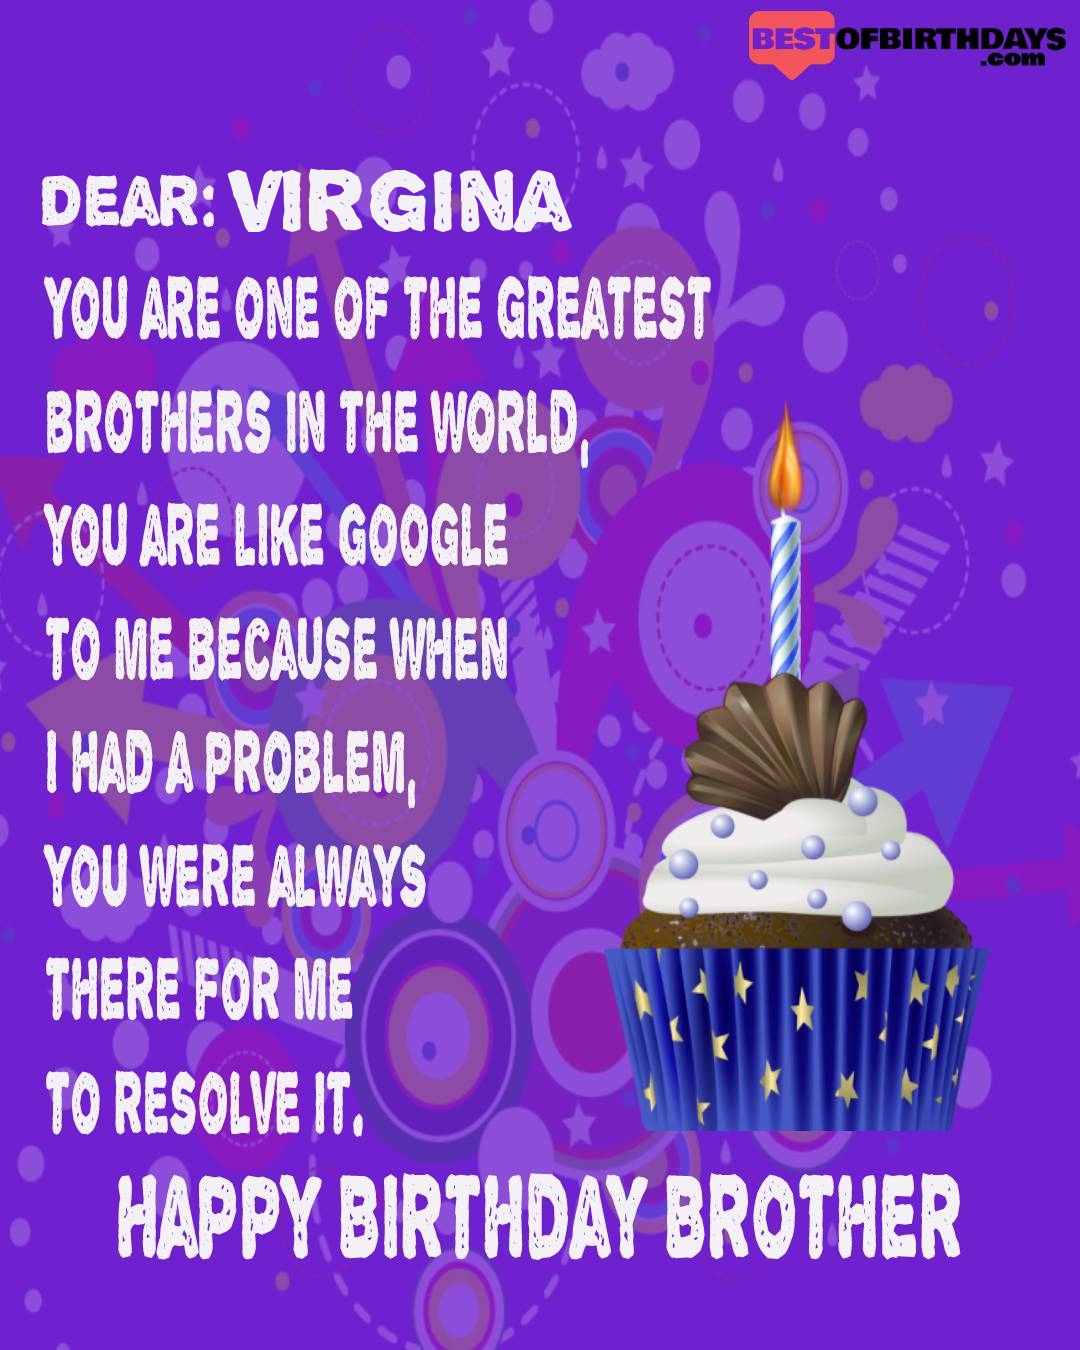 Happy birthday virgina bhai brother bro